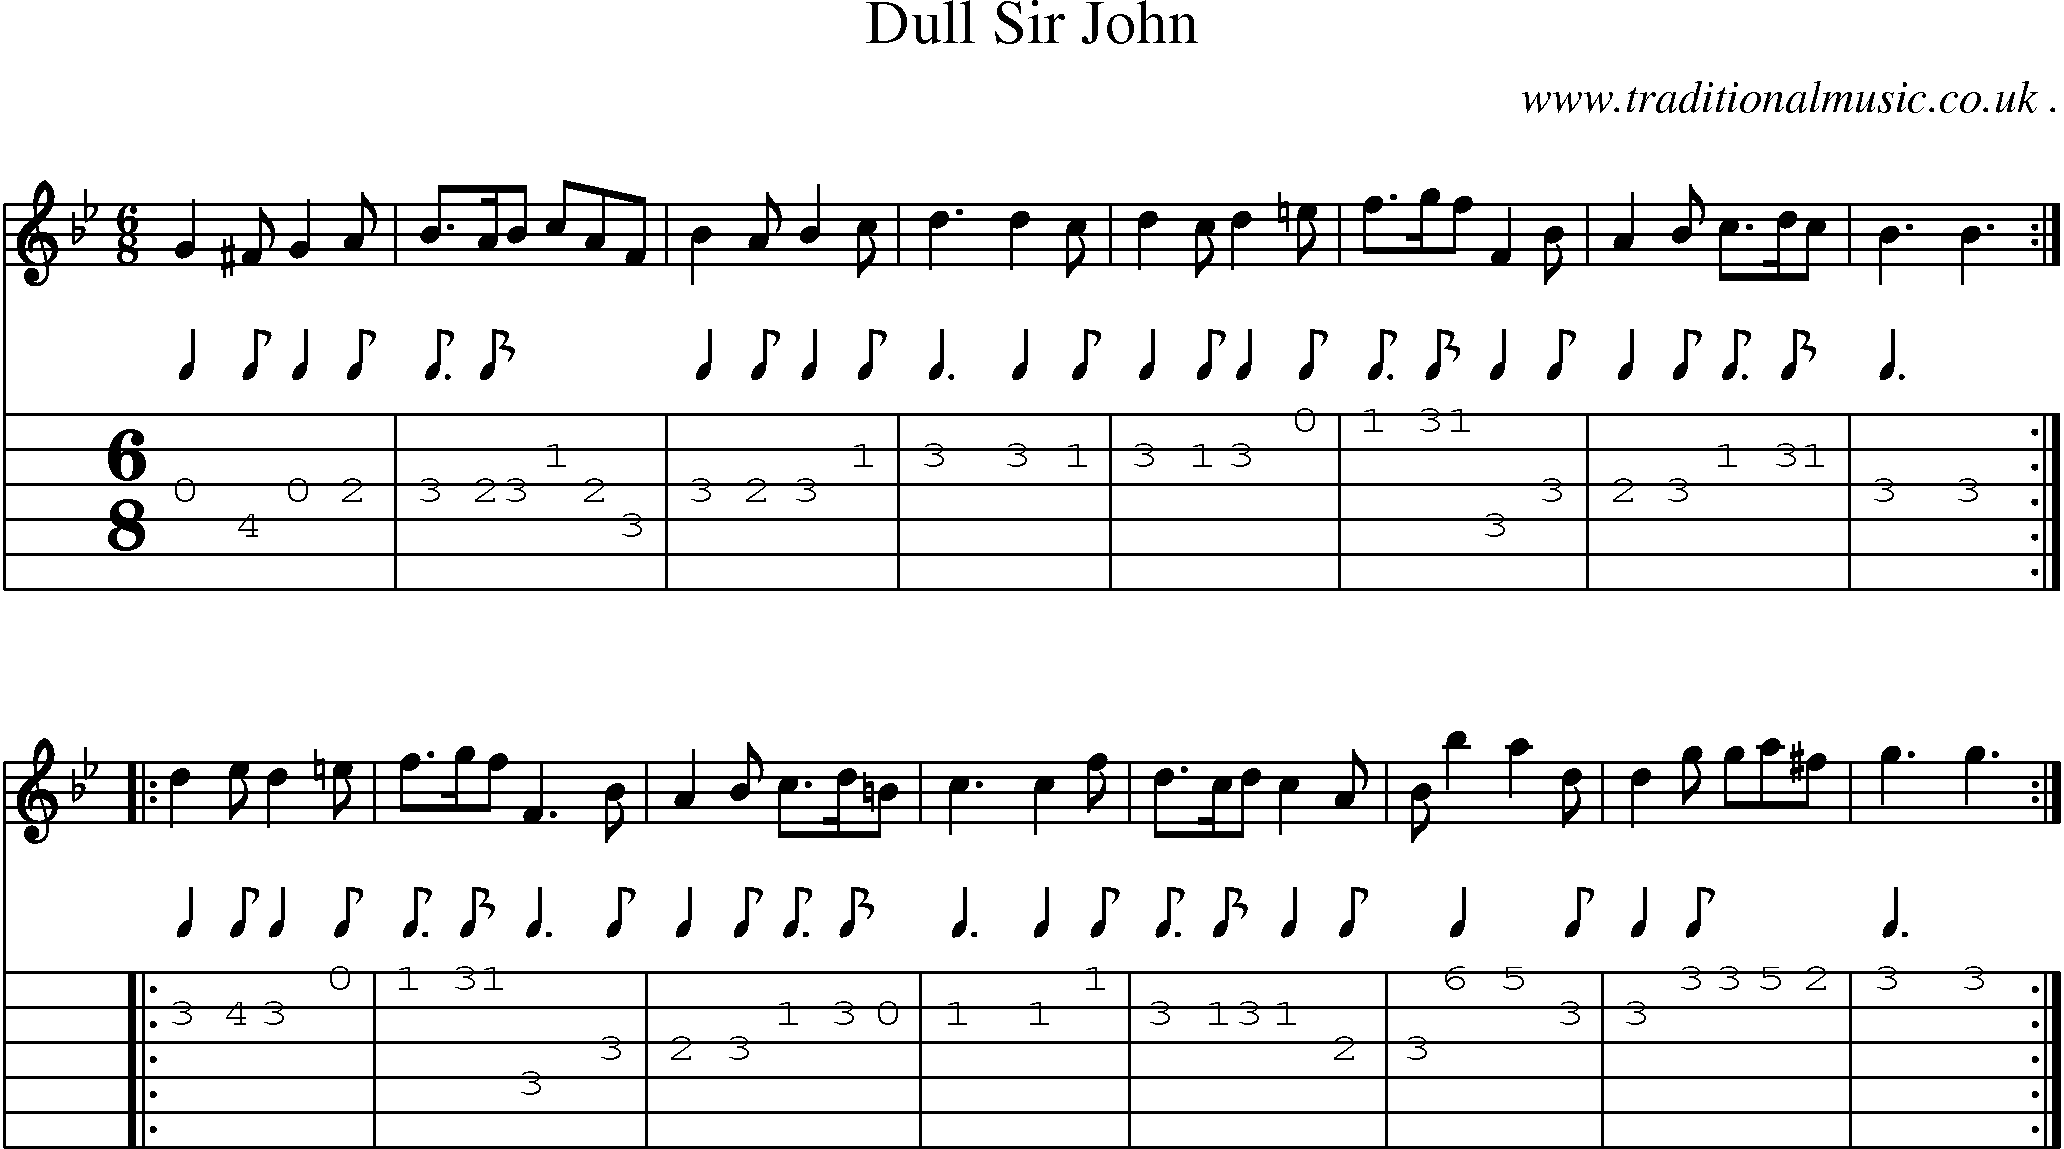 Sheet-Music and Guitar Tabs for Dull Sir John